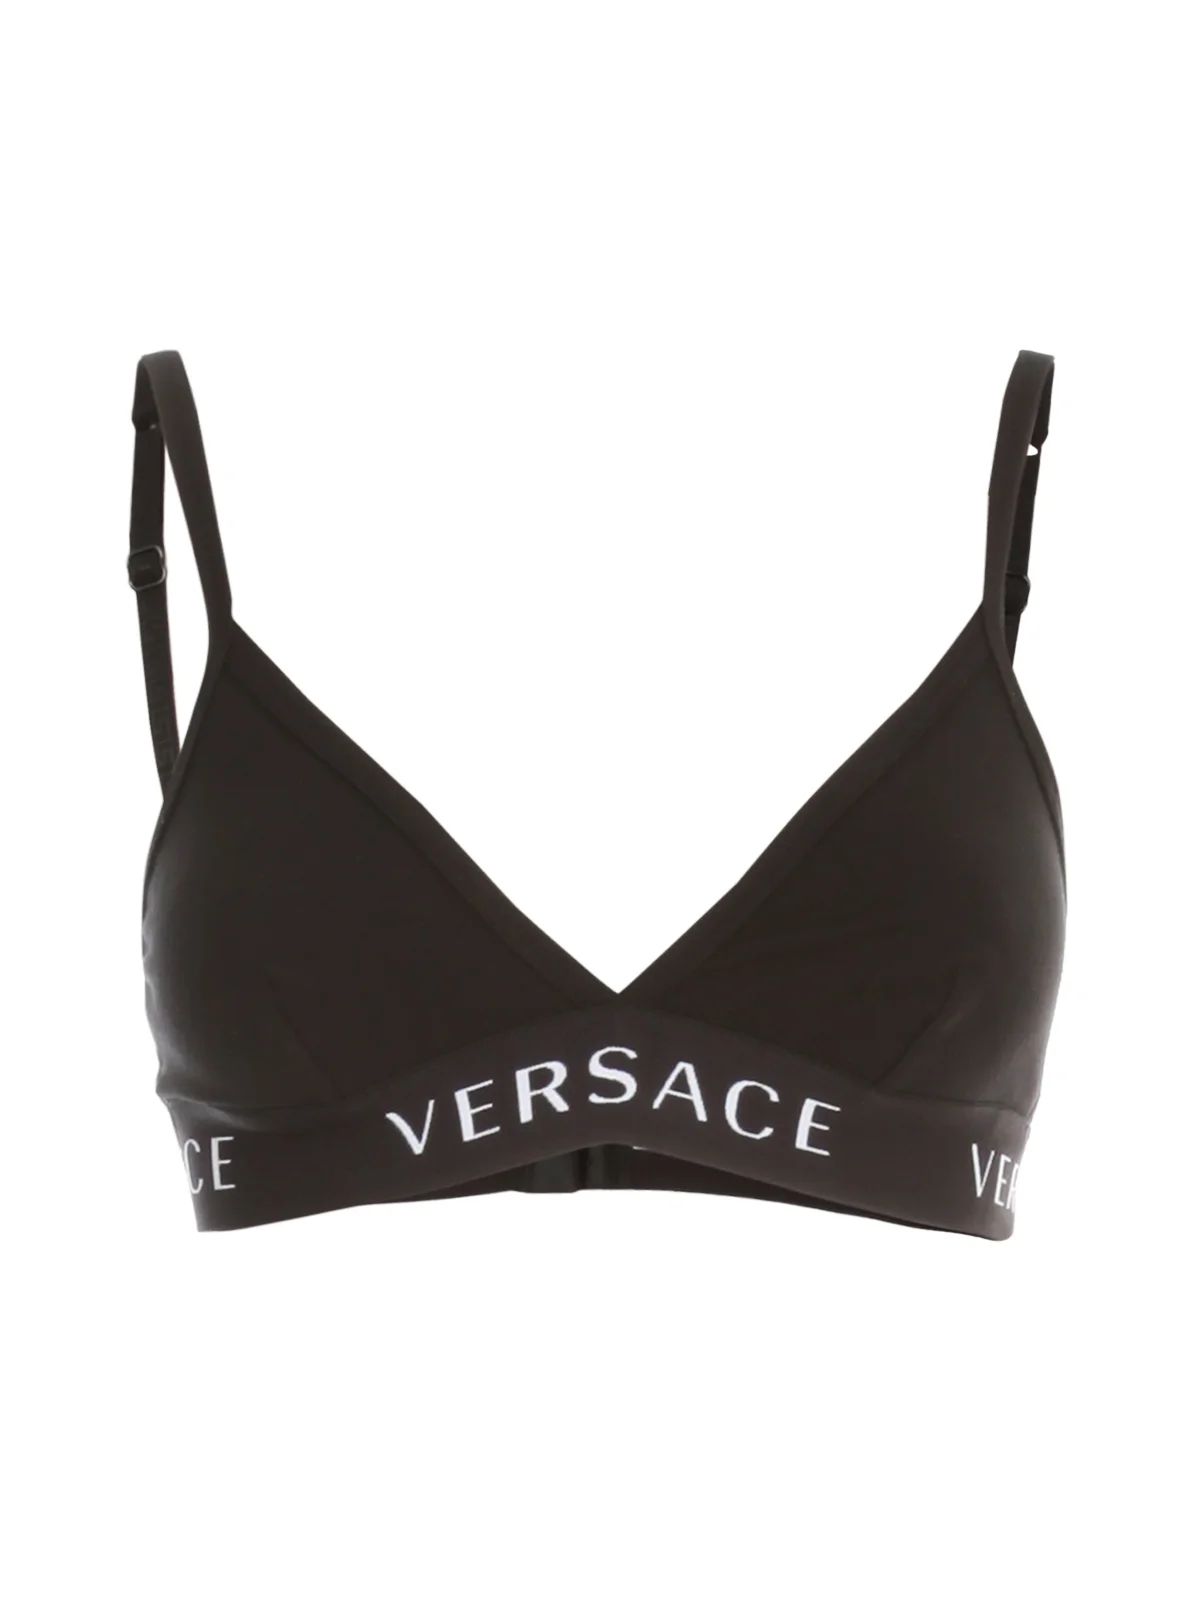 Versace Logo Detailed Sleeveless Bra | Cettire Global